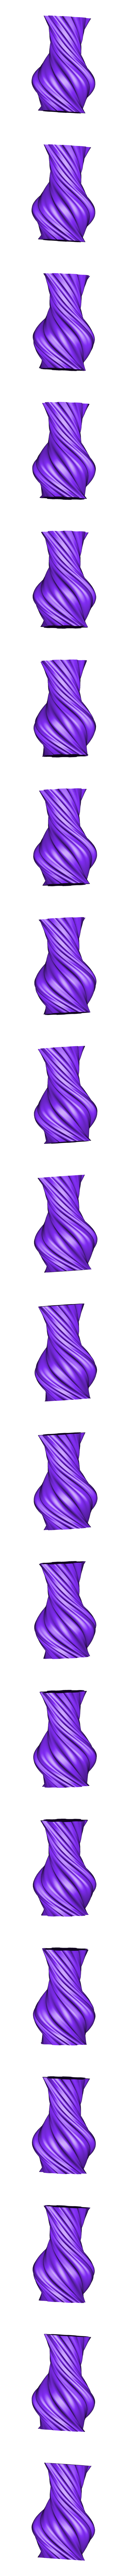 Round_Vase-Torqued.STL Télécharger fichier STL gratuit Round vase (torqued or not) • Modèle à imprimer en 3D, Egon